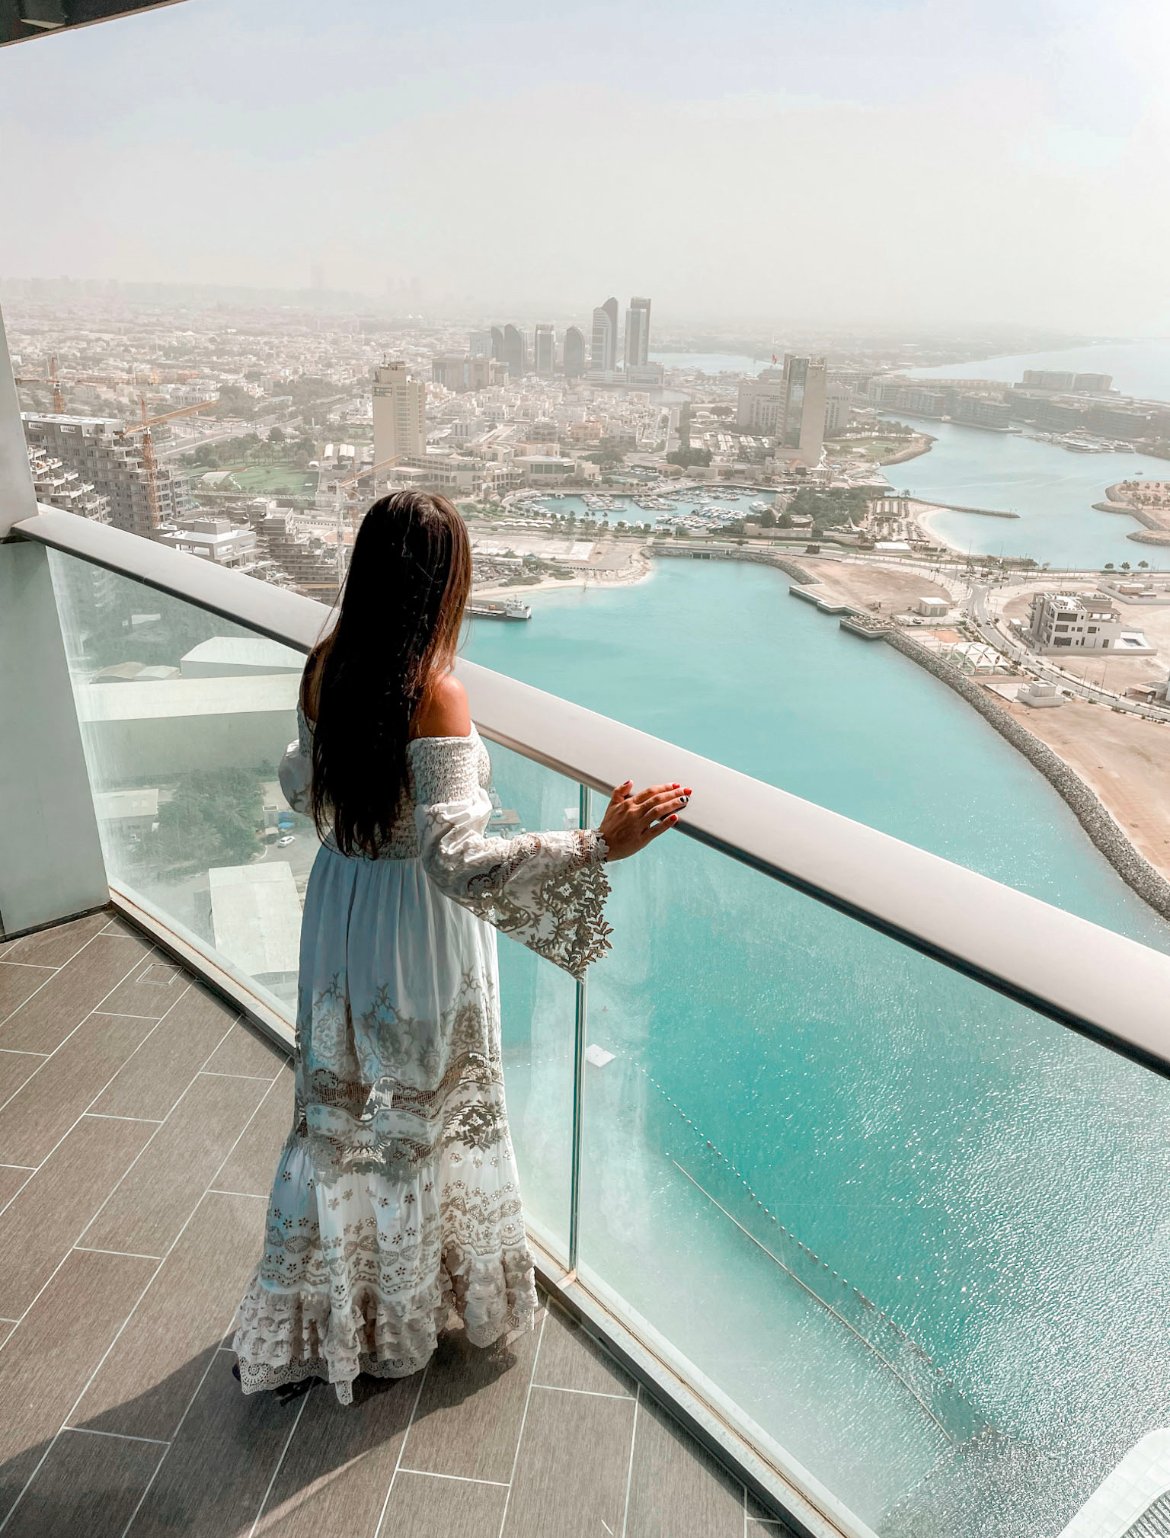 Grand Hyatt Hotel, where to stay in Abu Dhabi